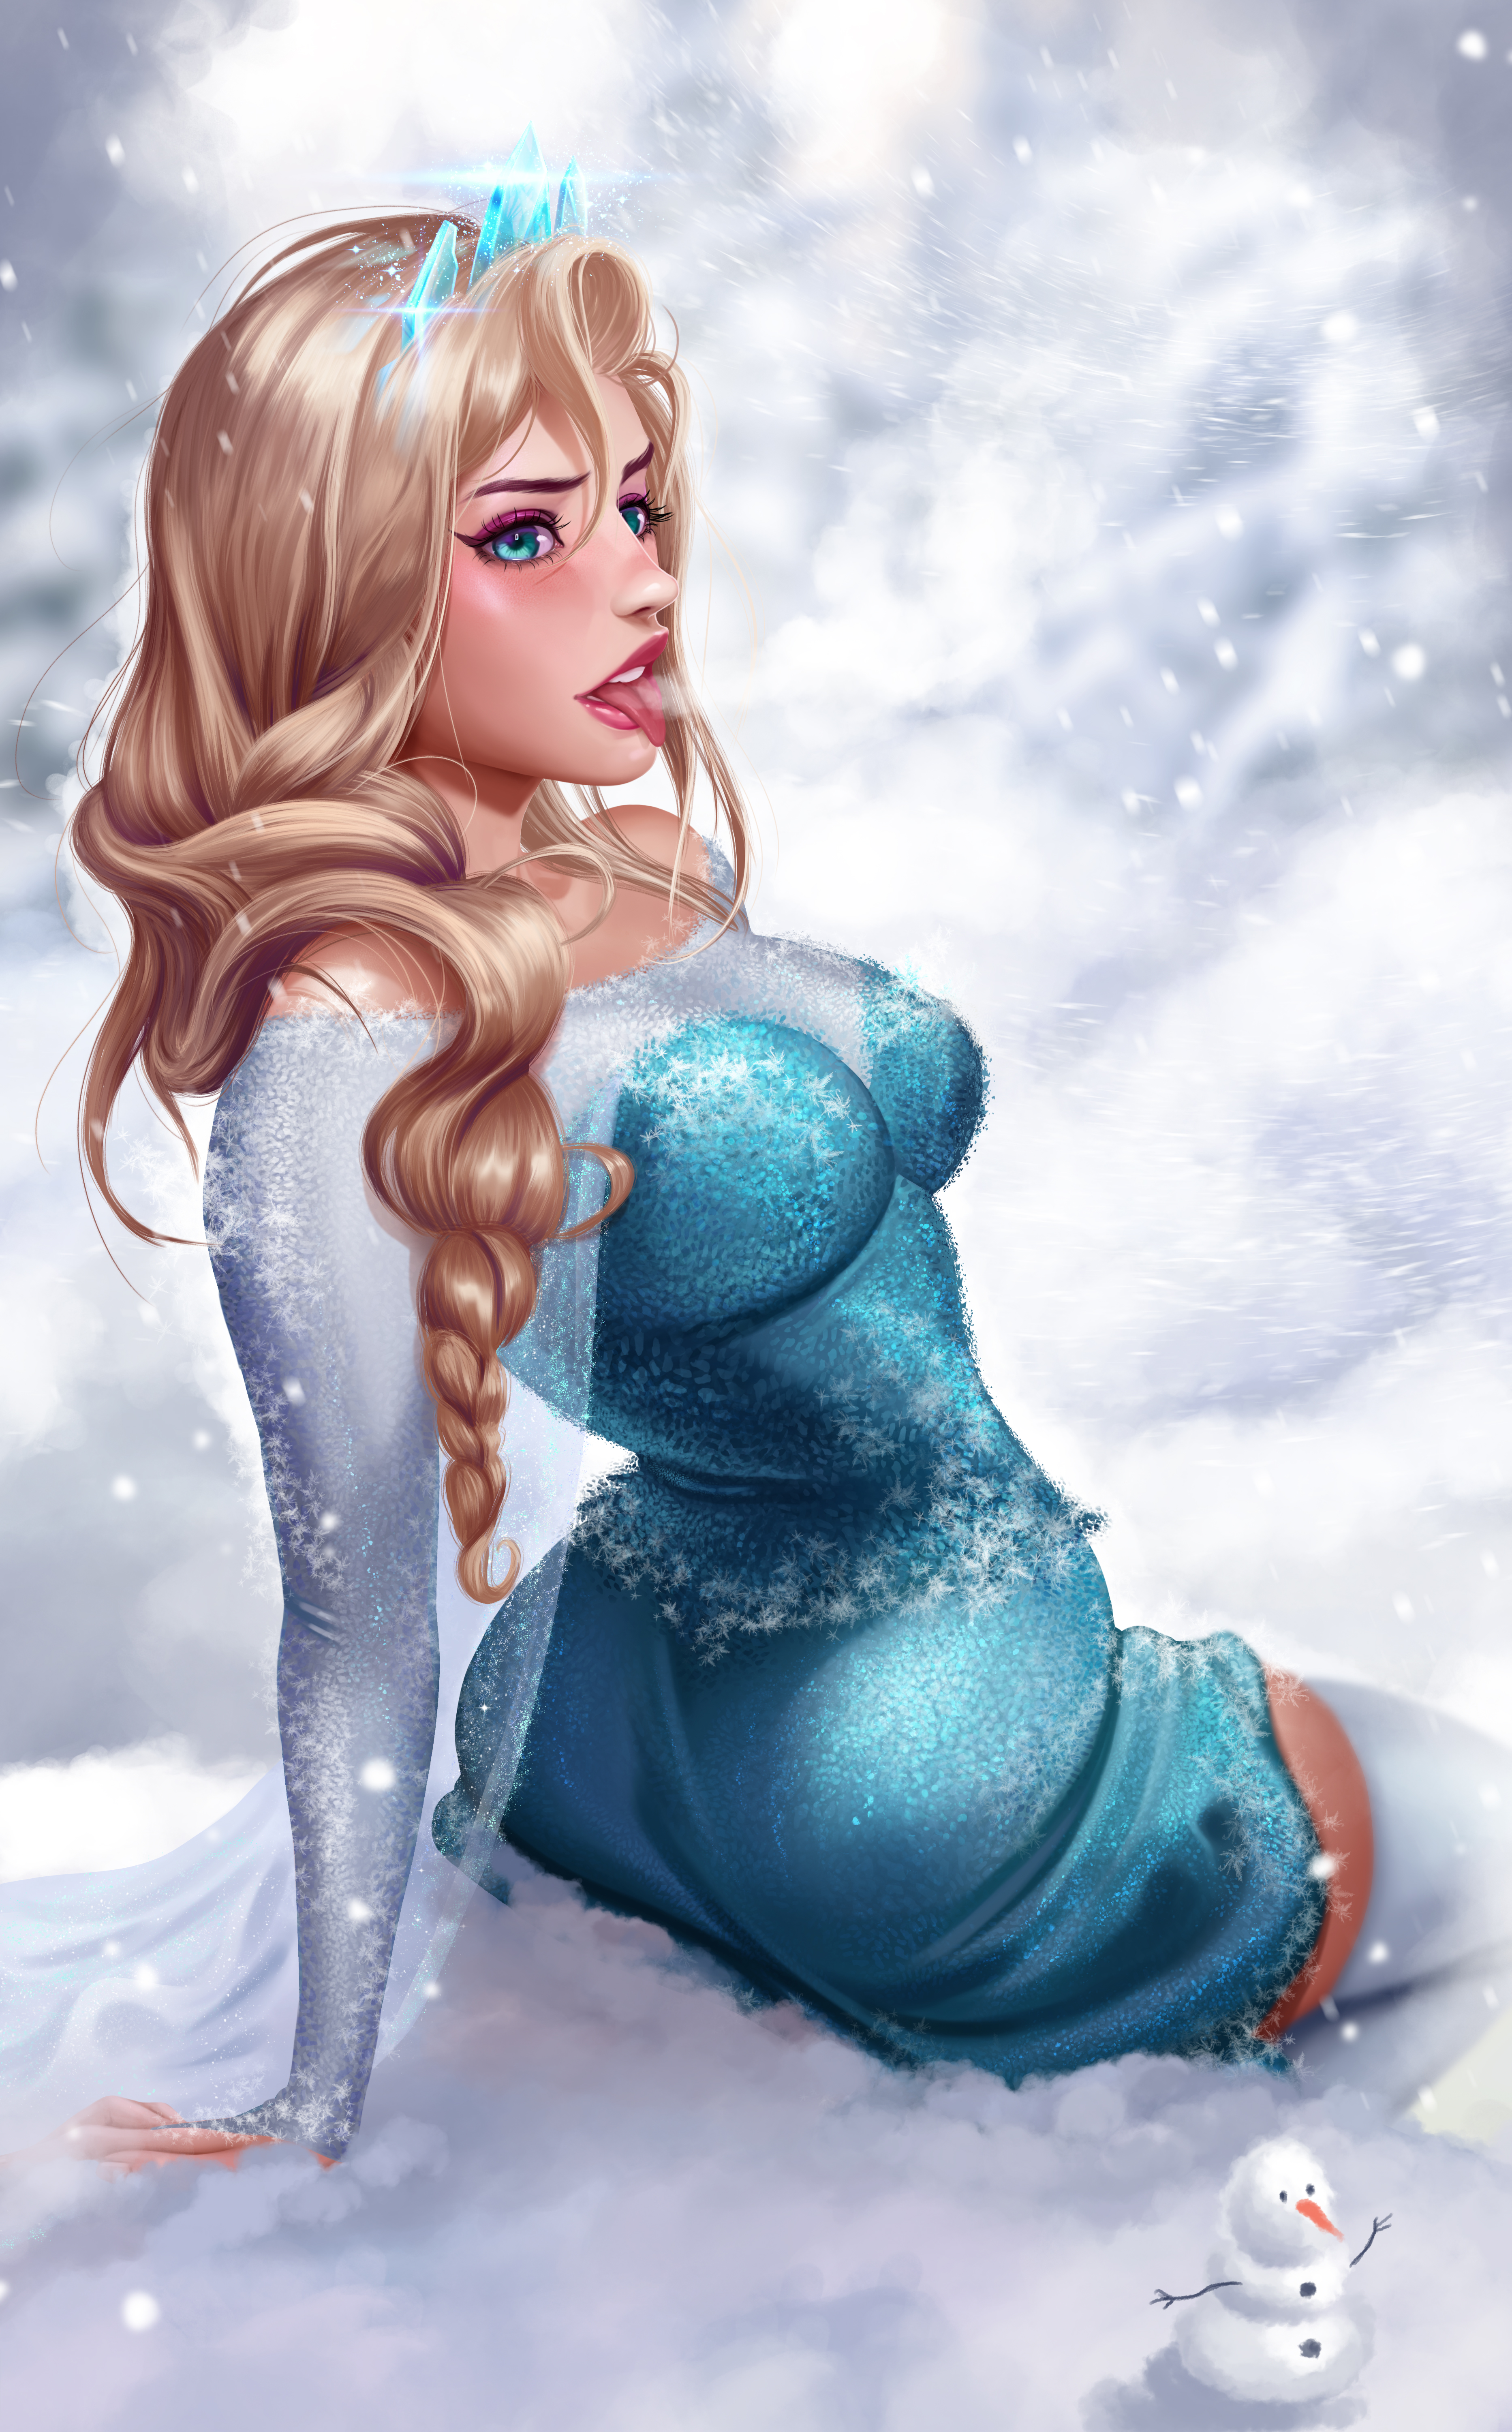 General 3731x6000 Elsa Frozen (movie) Disney princesses blonde snowing snow dress tongue out blue eyes crown 2D artwork drawing fan art Prywinko blushing cartoon digital art portrait display